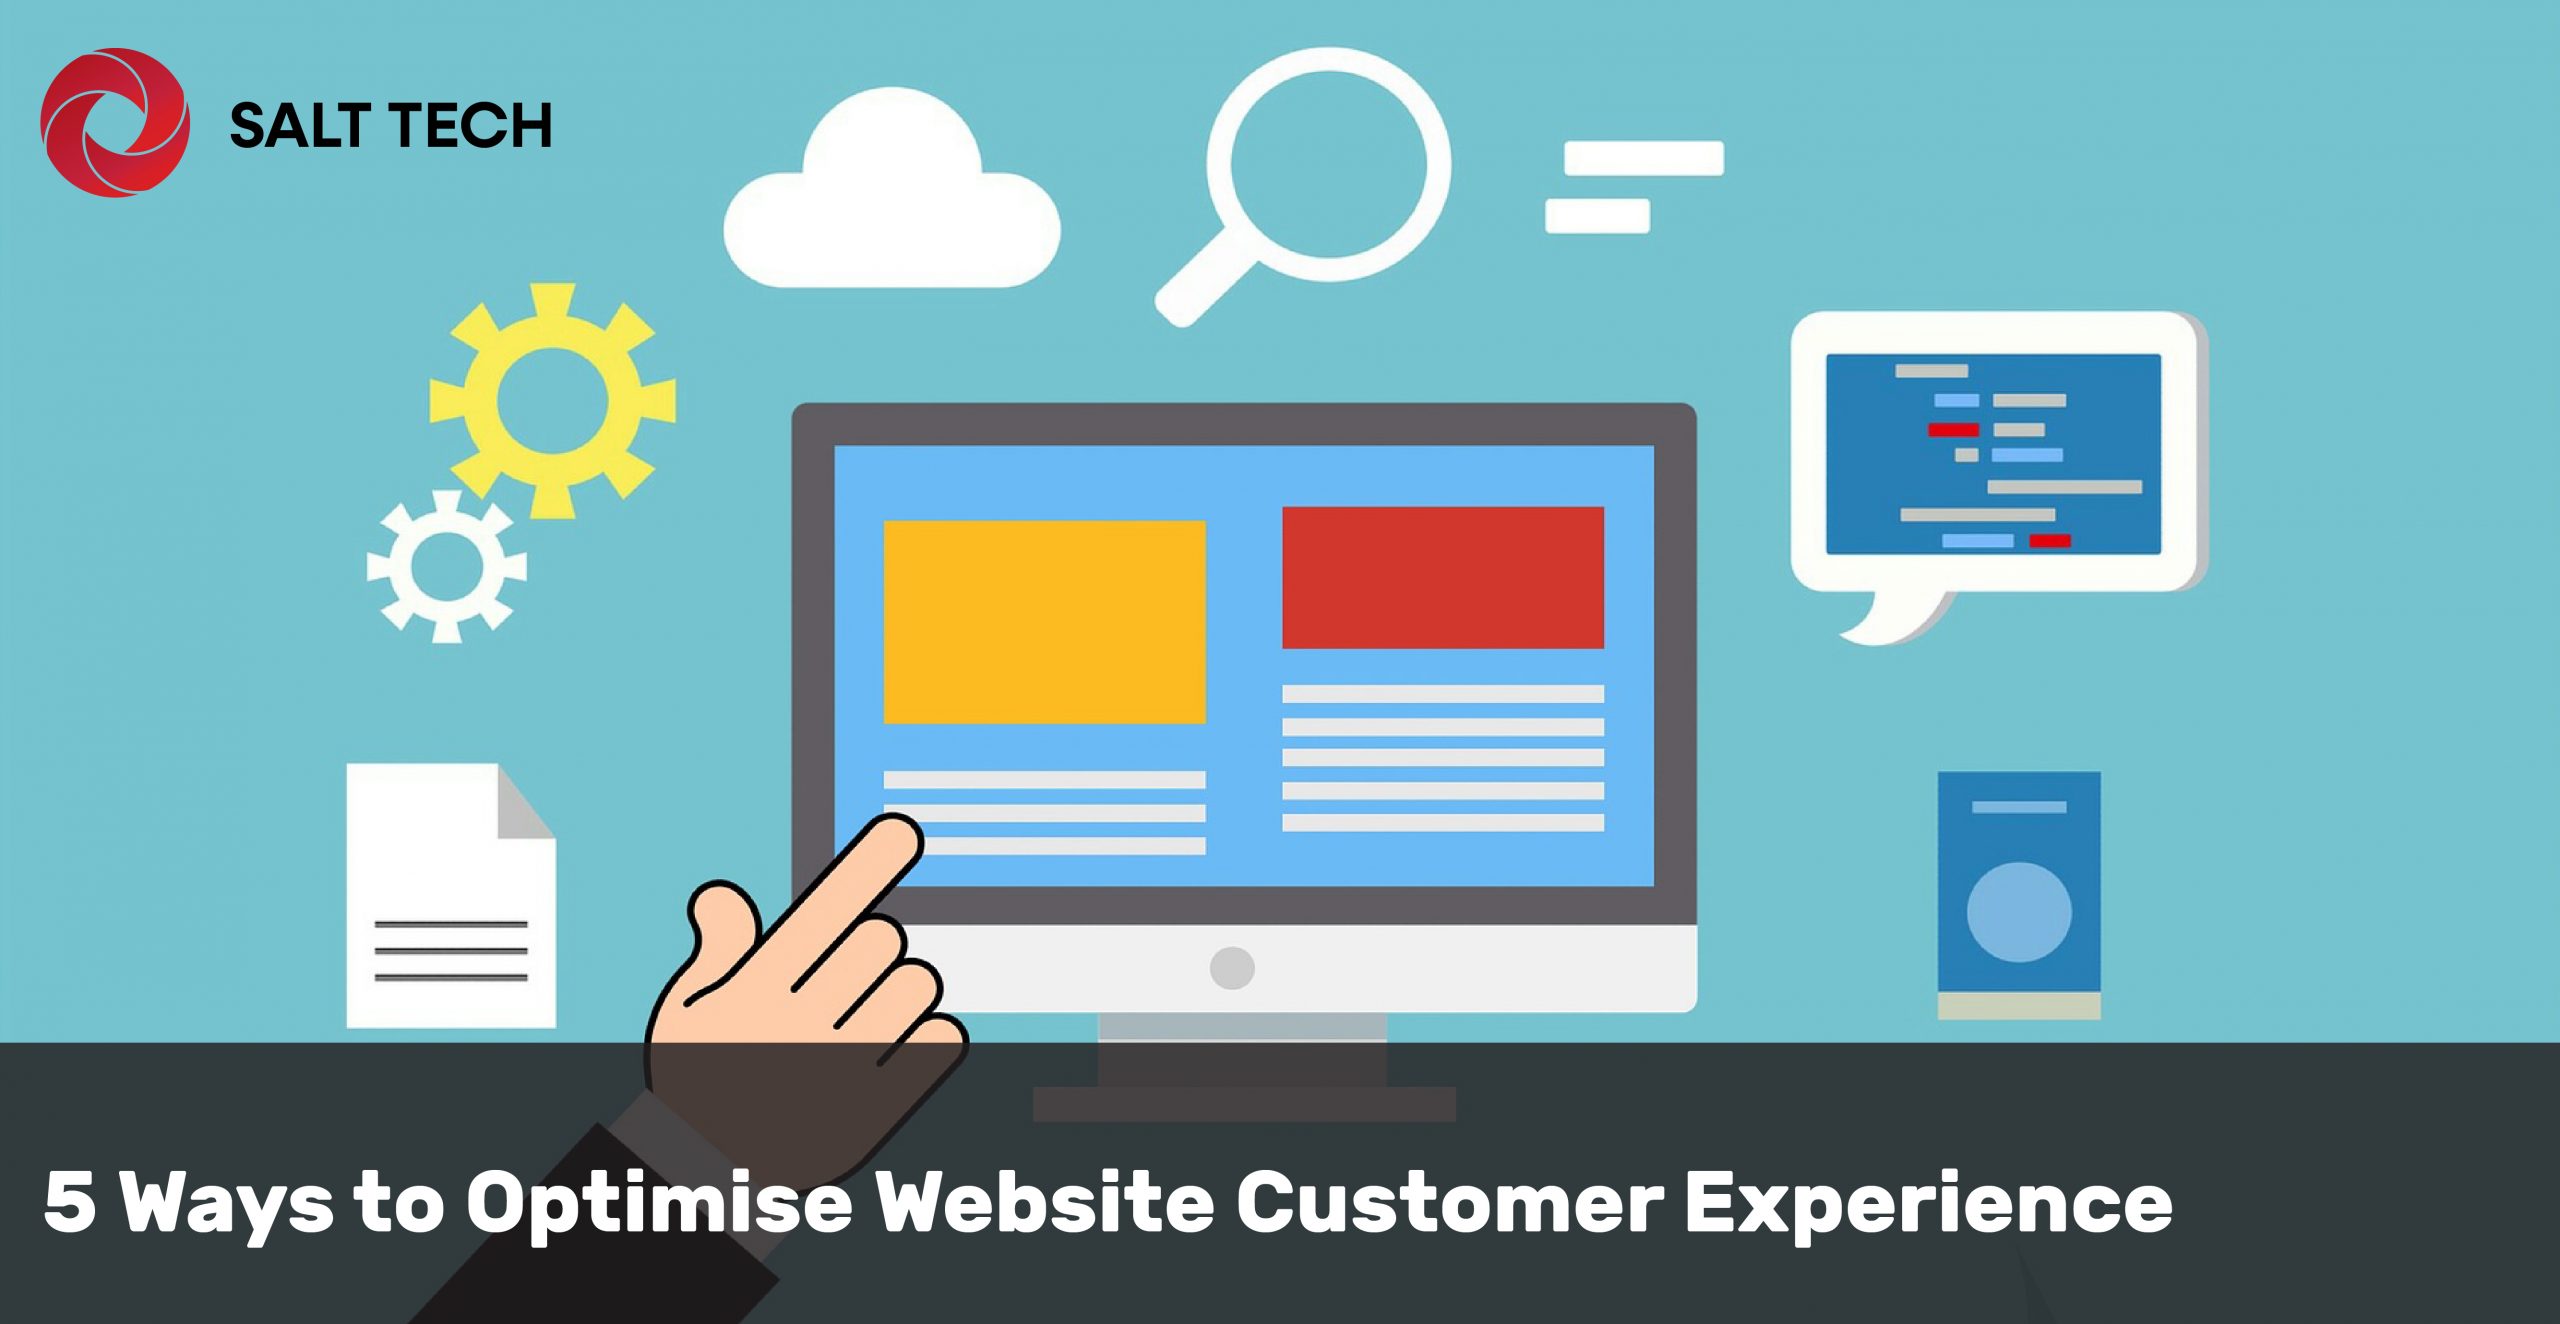 SALT TECH- 5 Ways to Optimise Website Customer Experience